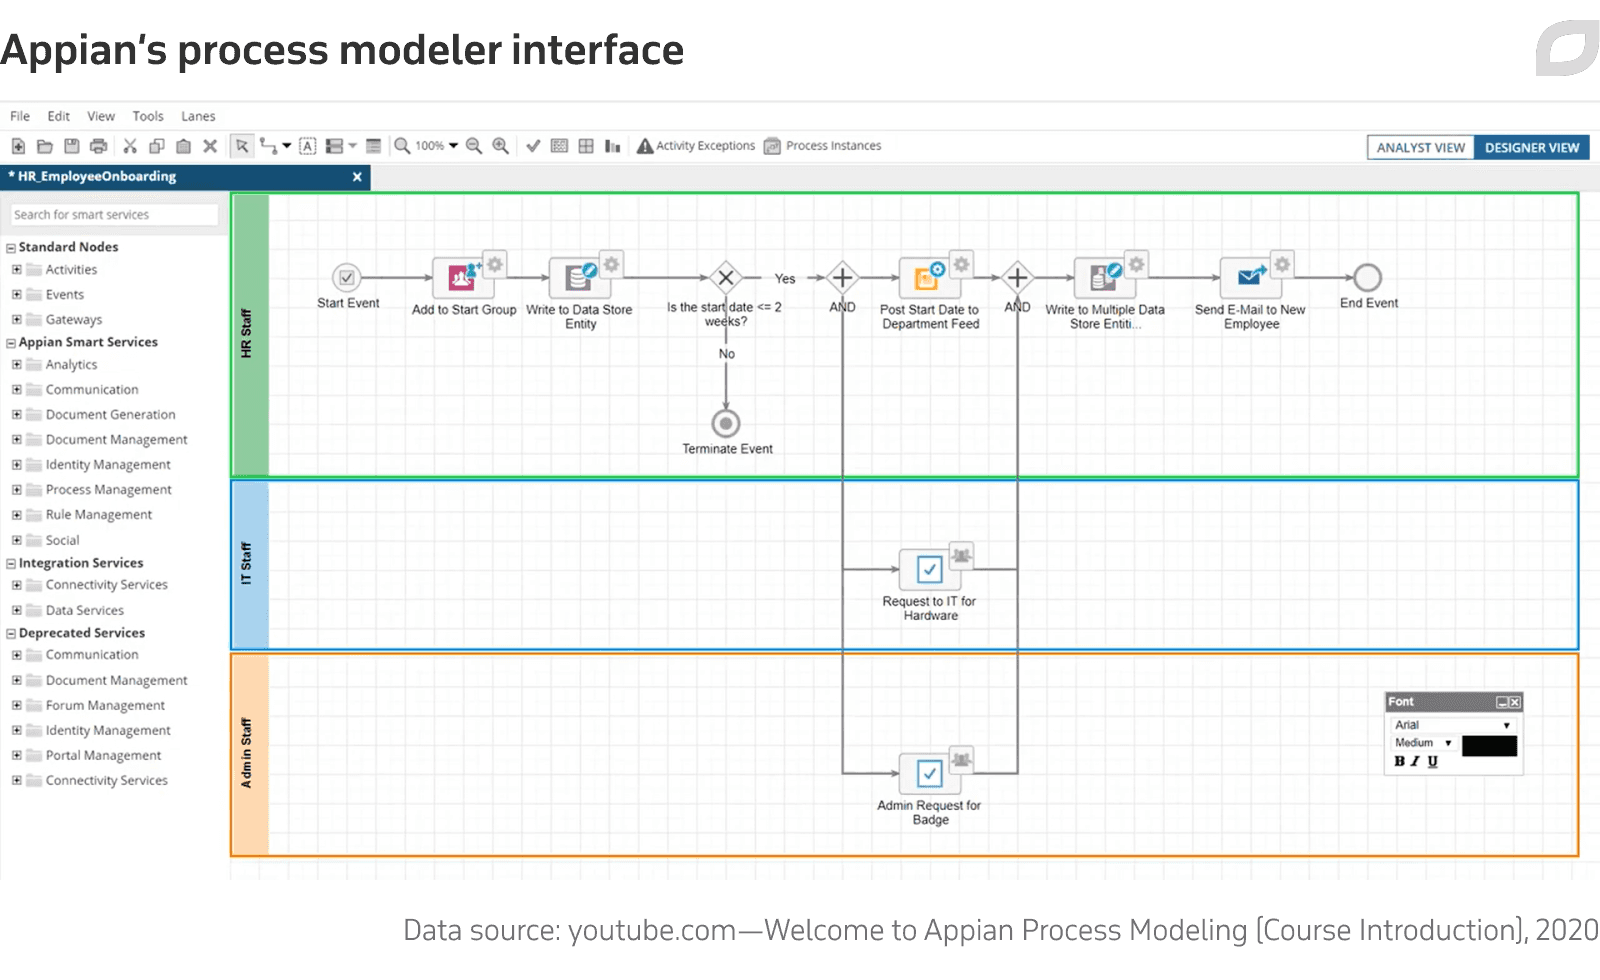 Appian’s process modeler interface